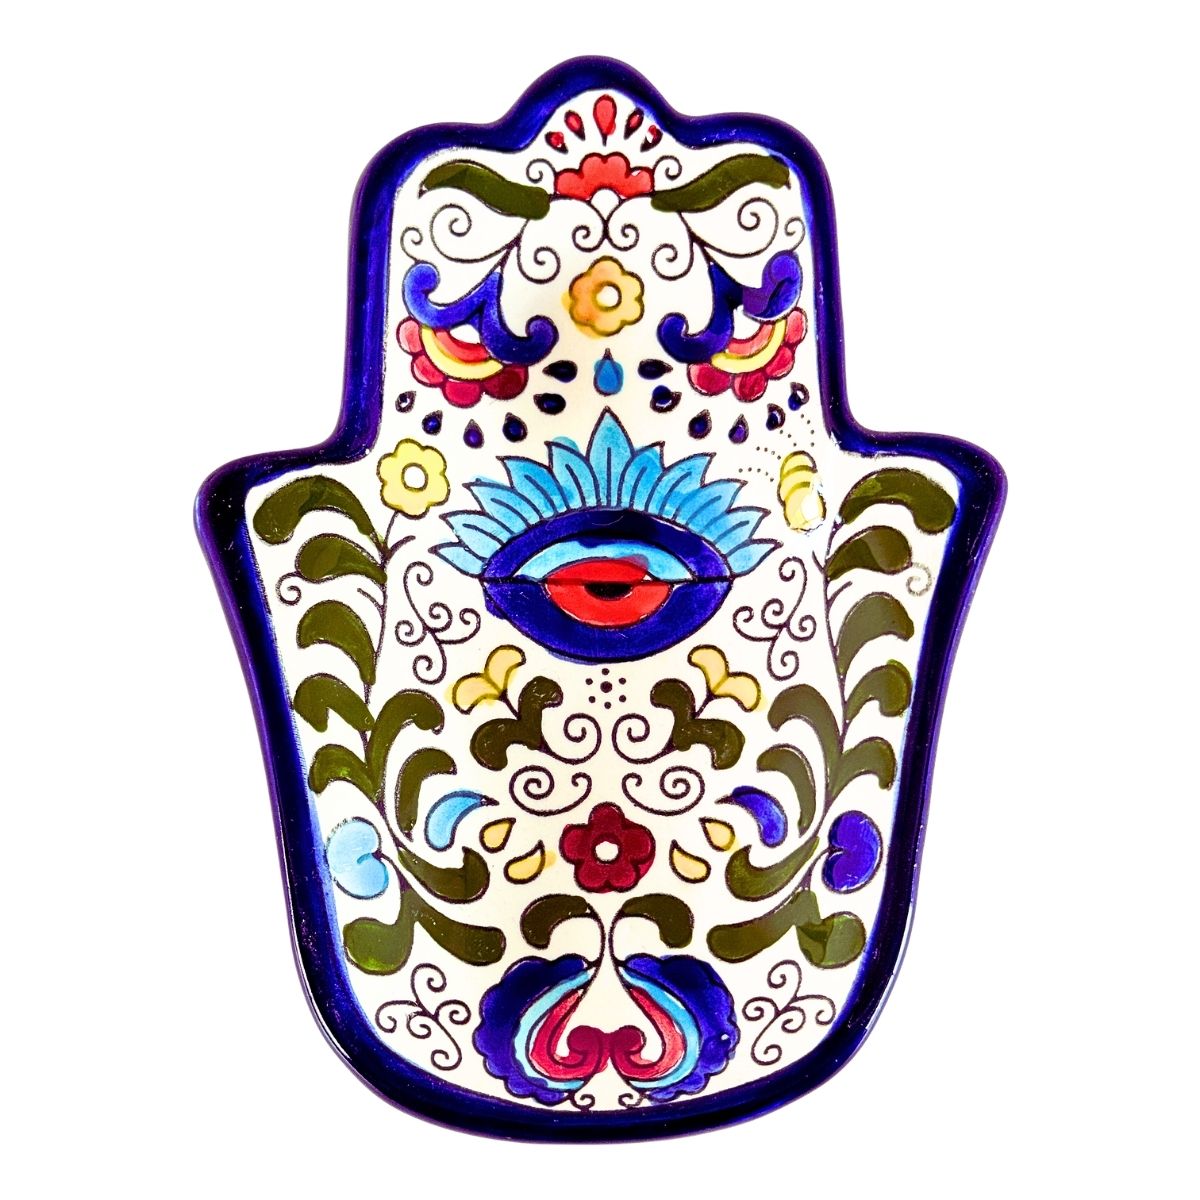 Ceramic "Hamsa" Dish - Multicolored Eye